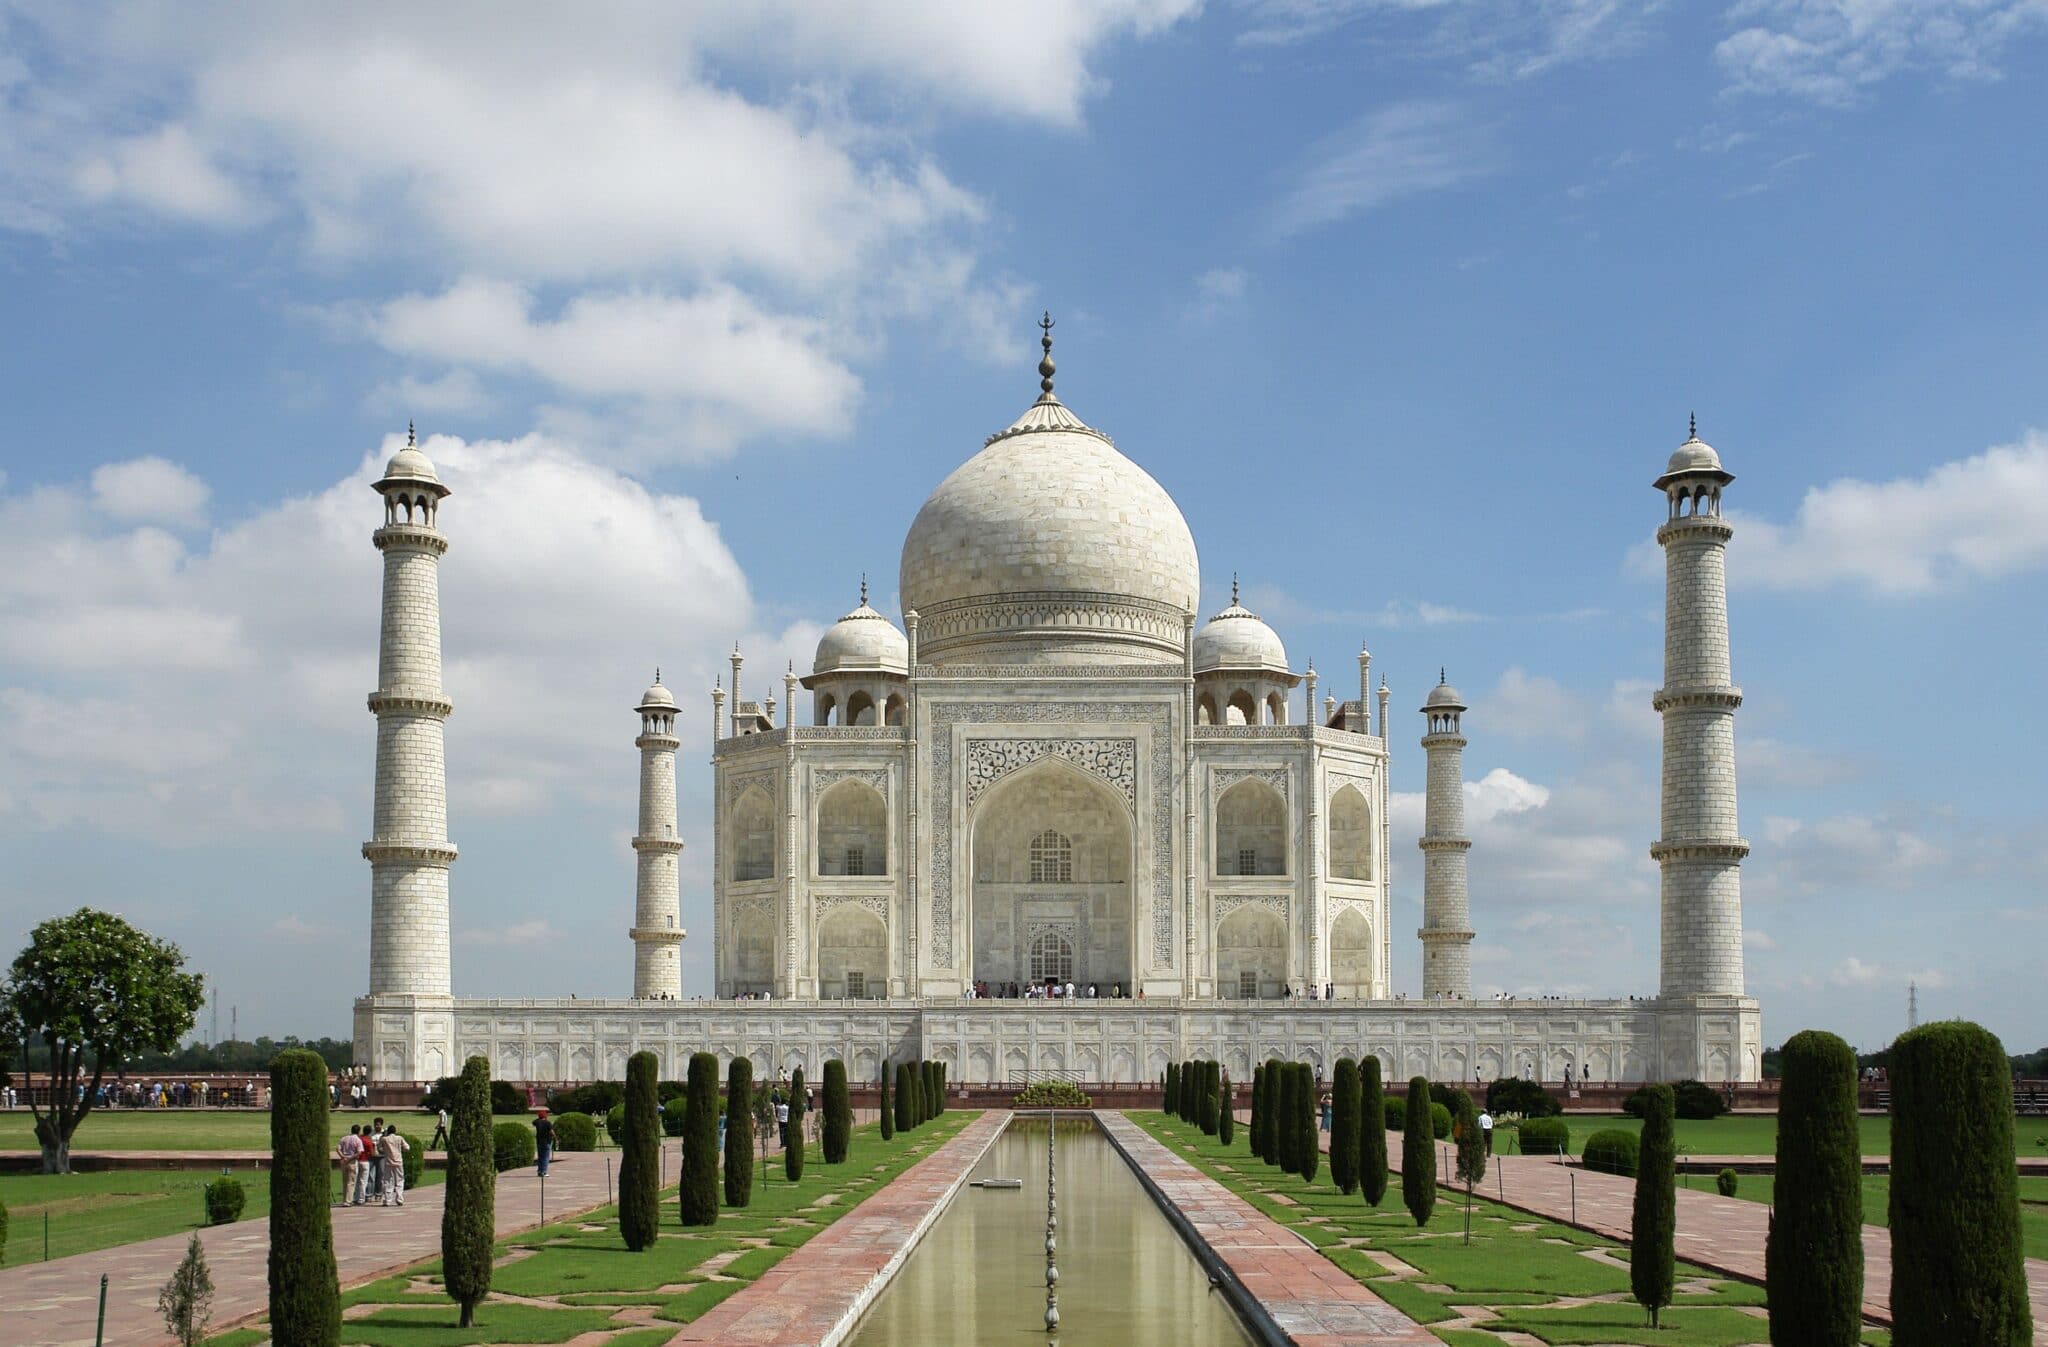 Las 7 Maravillas Del Mundo: El Taj Mahal